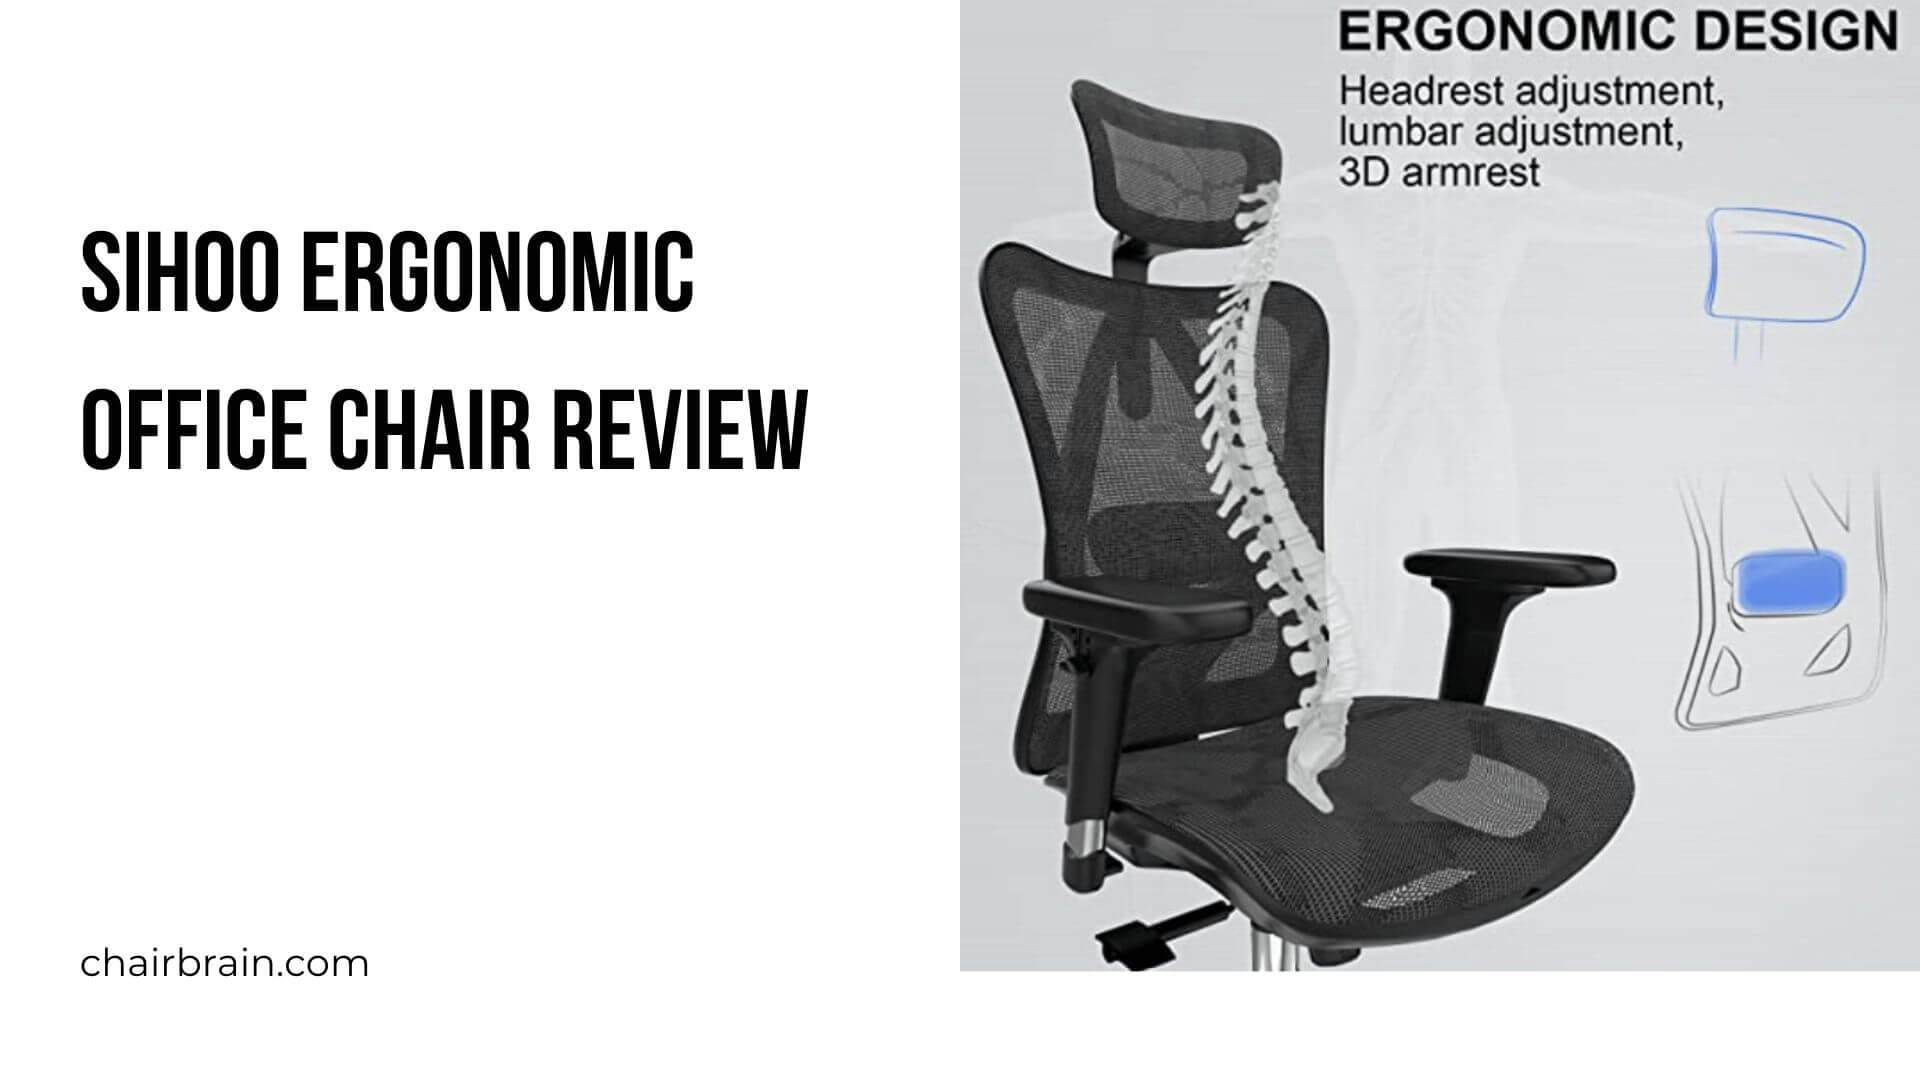 SIHOO ergonomic office chair review